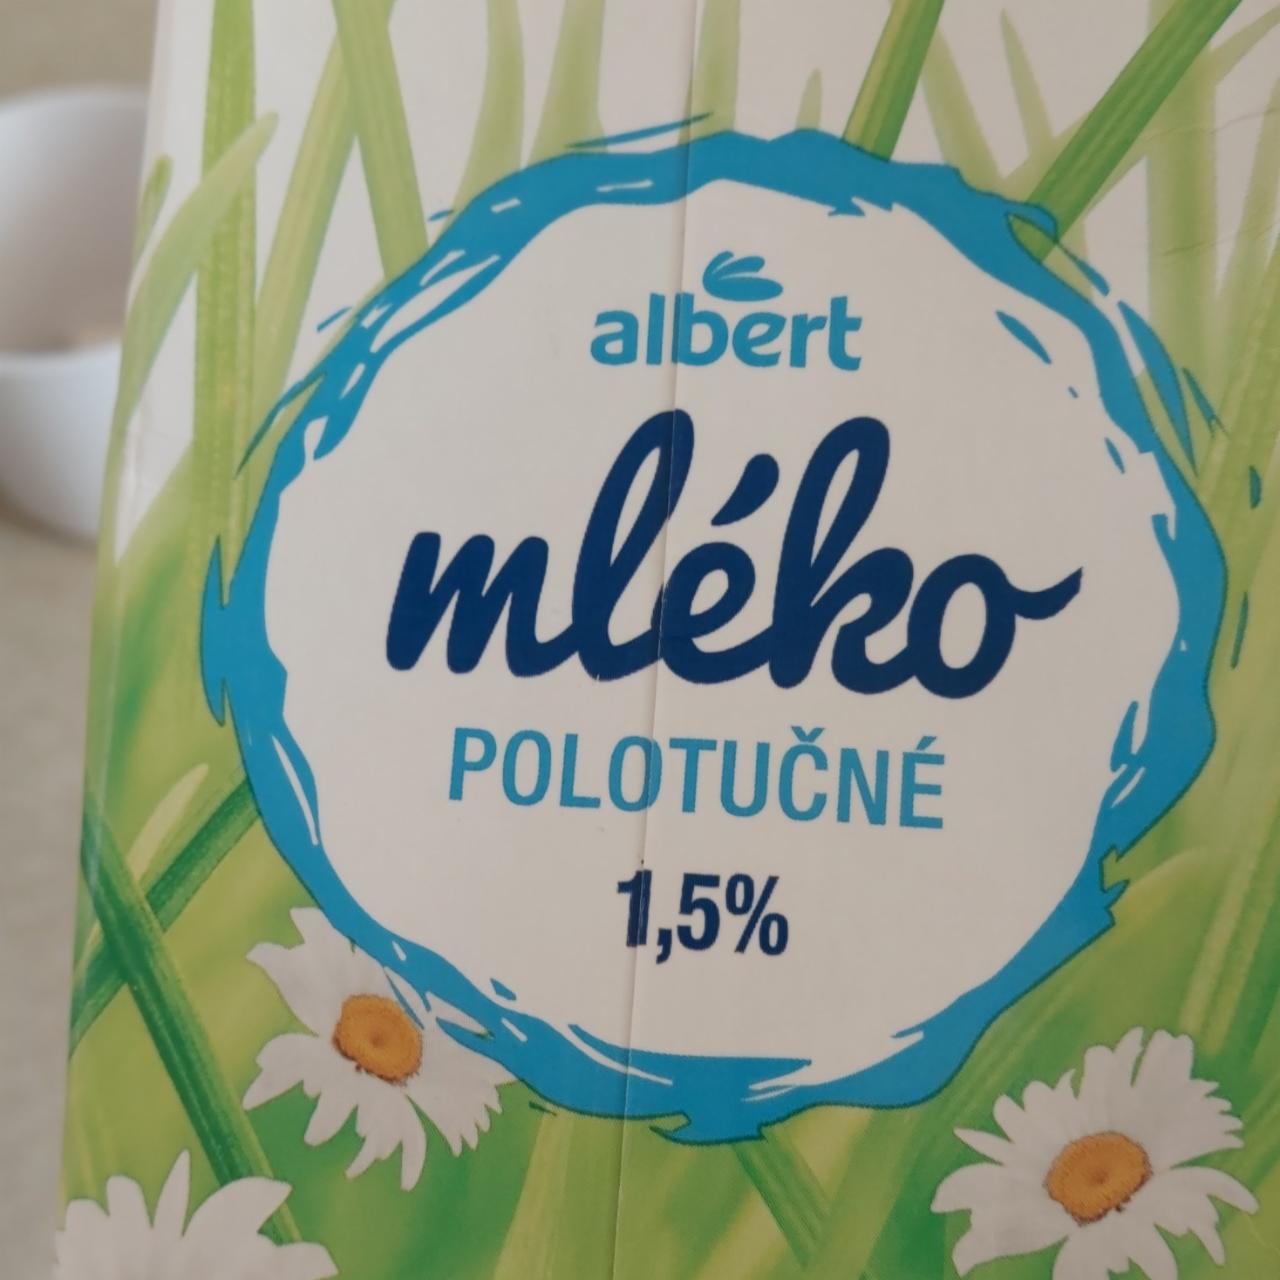 Фото - Mleko 1.5% polotucne Albert